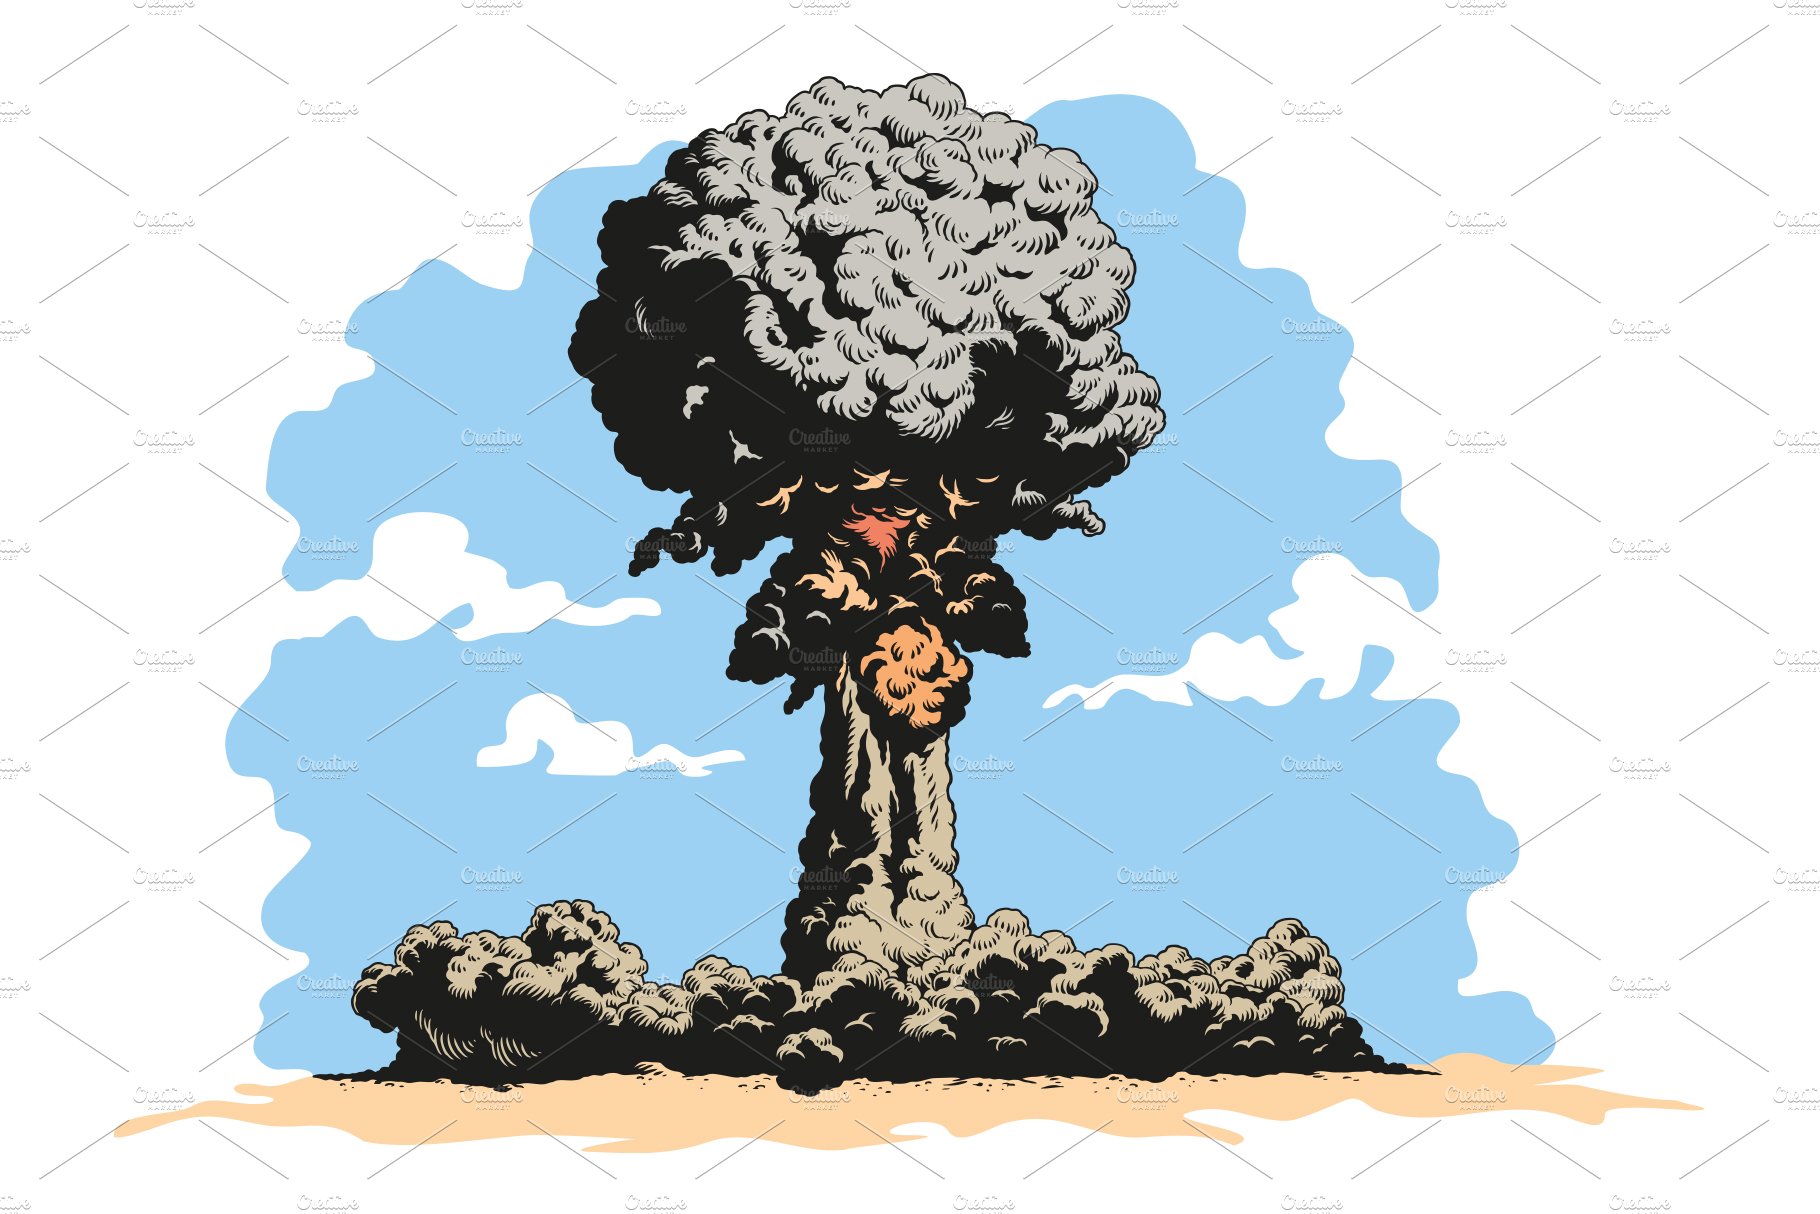 Mushroom cloud silhouette cover image.